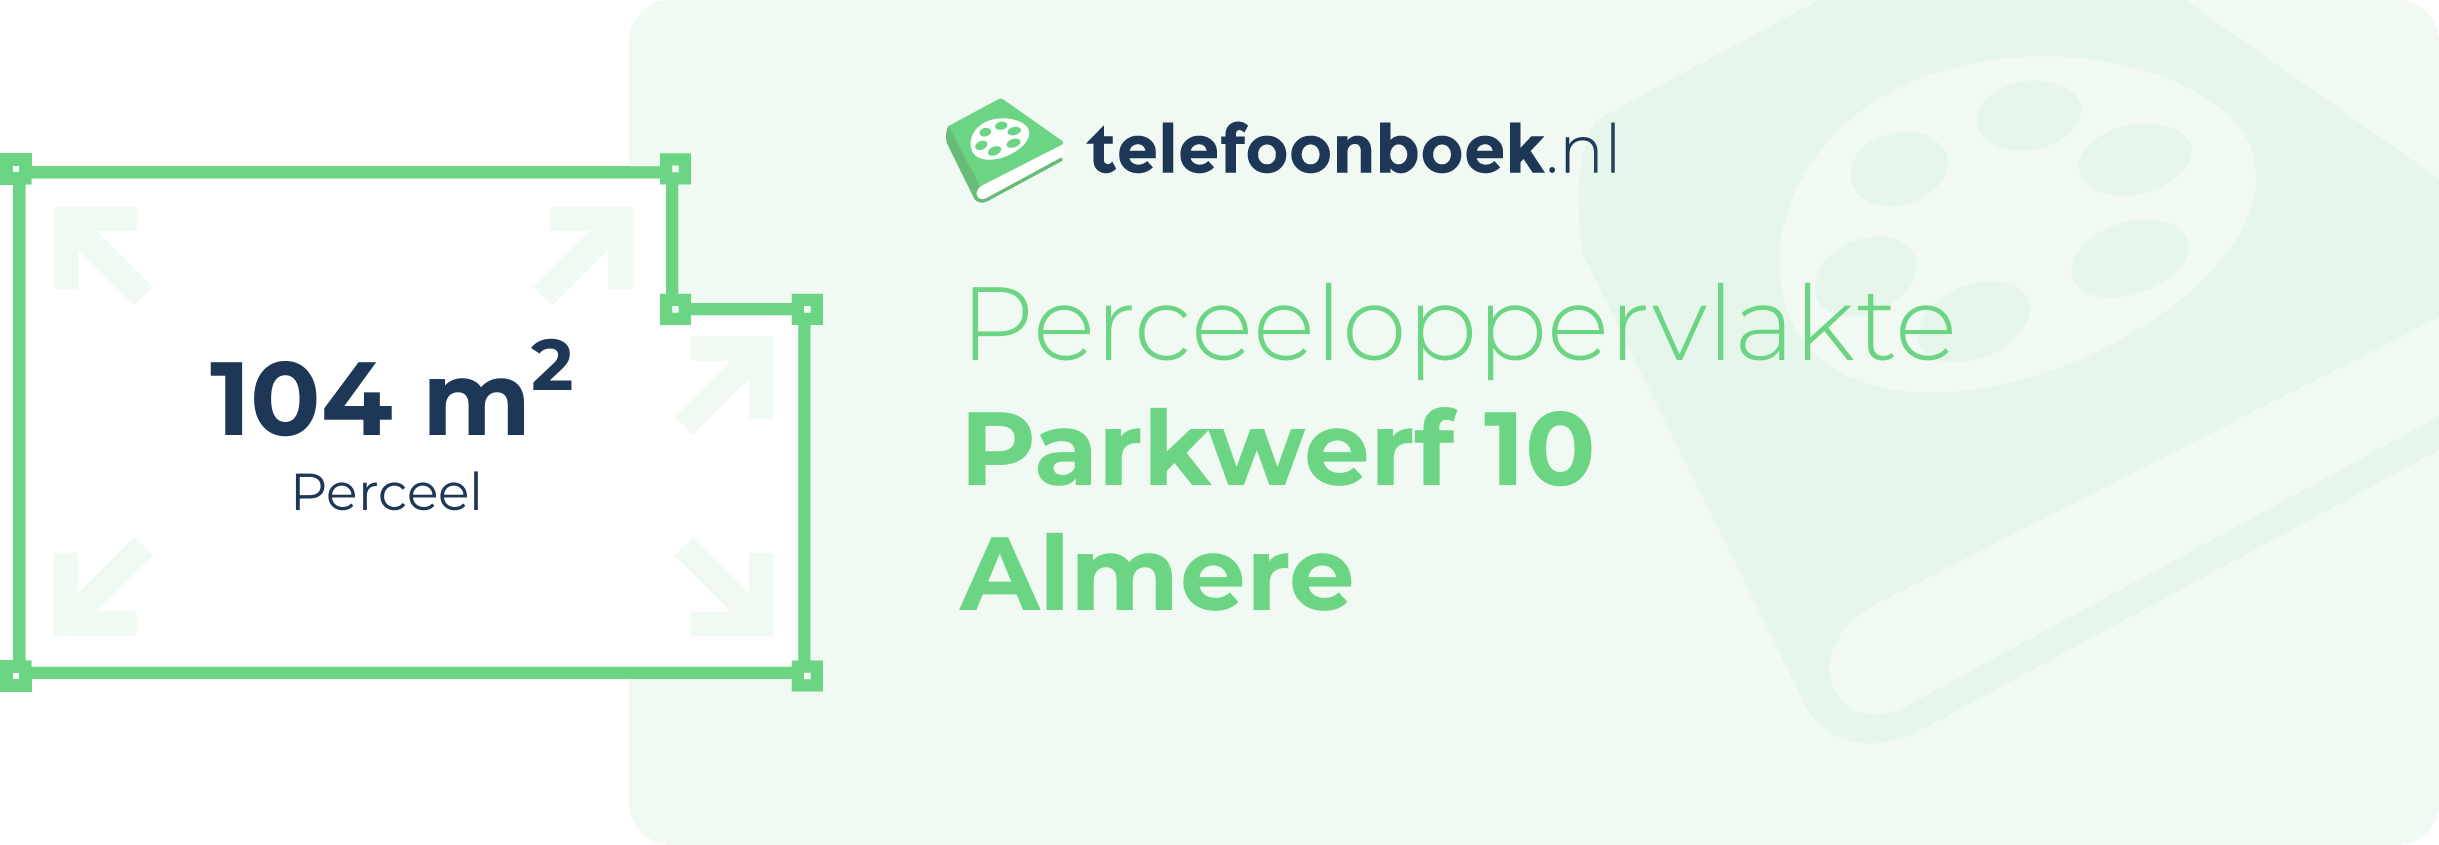 Perceeloppervlakte Parkwerf 10 Almere